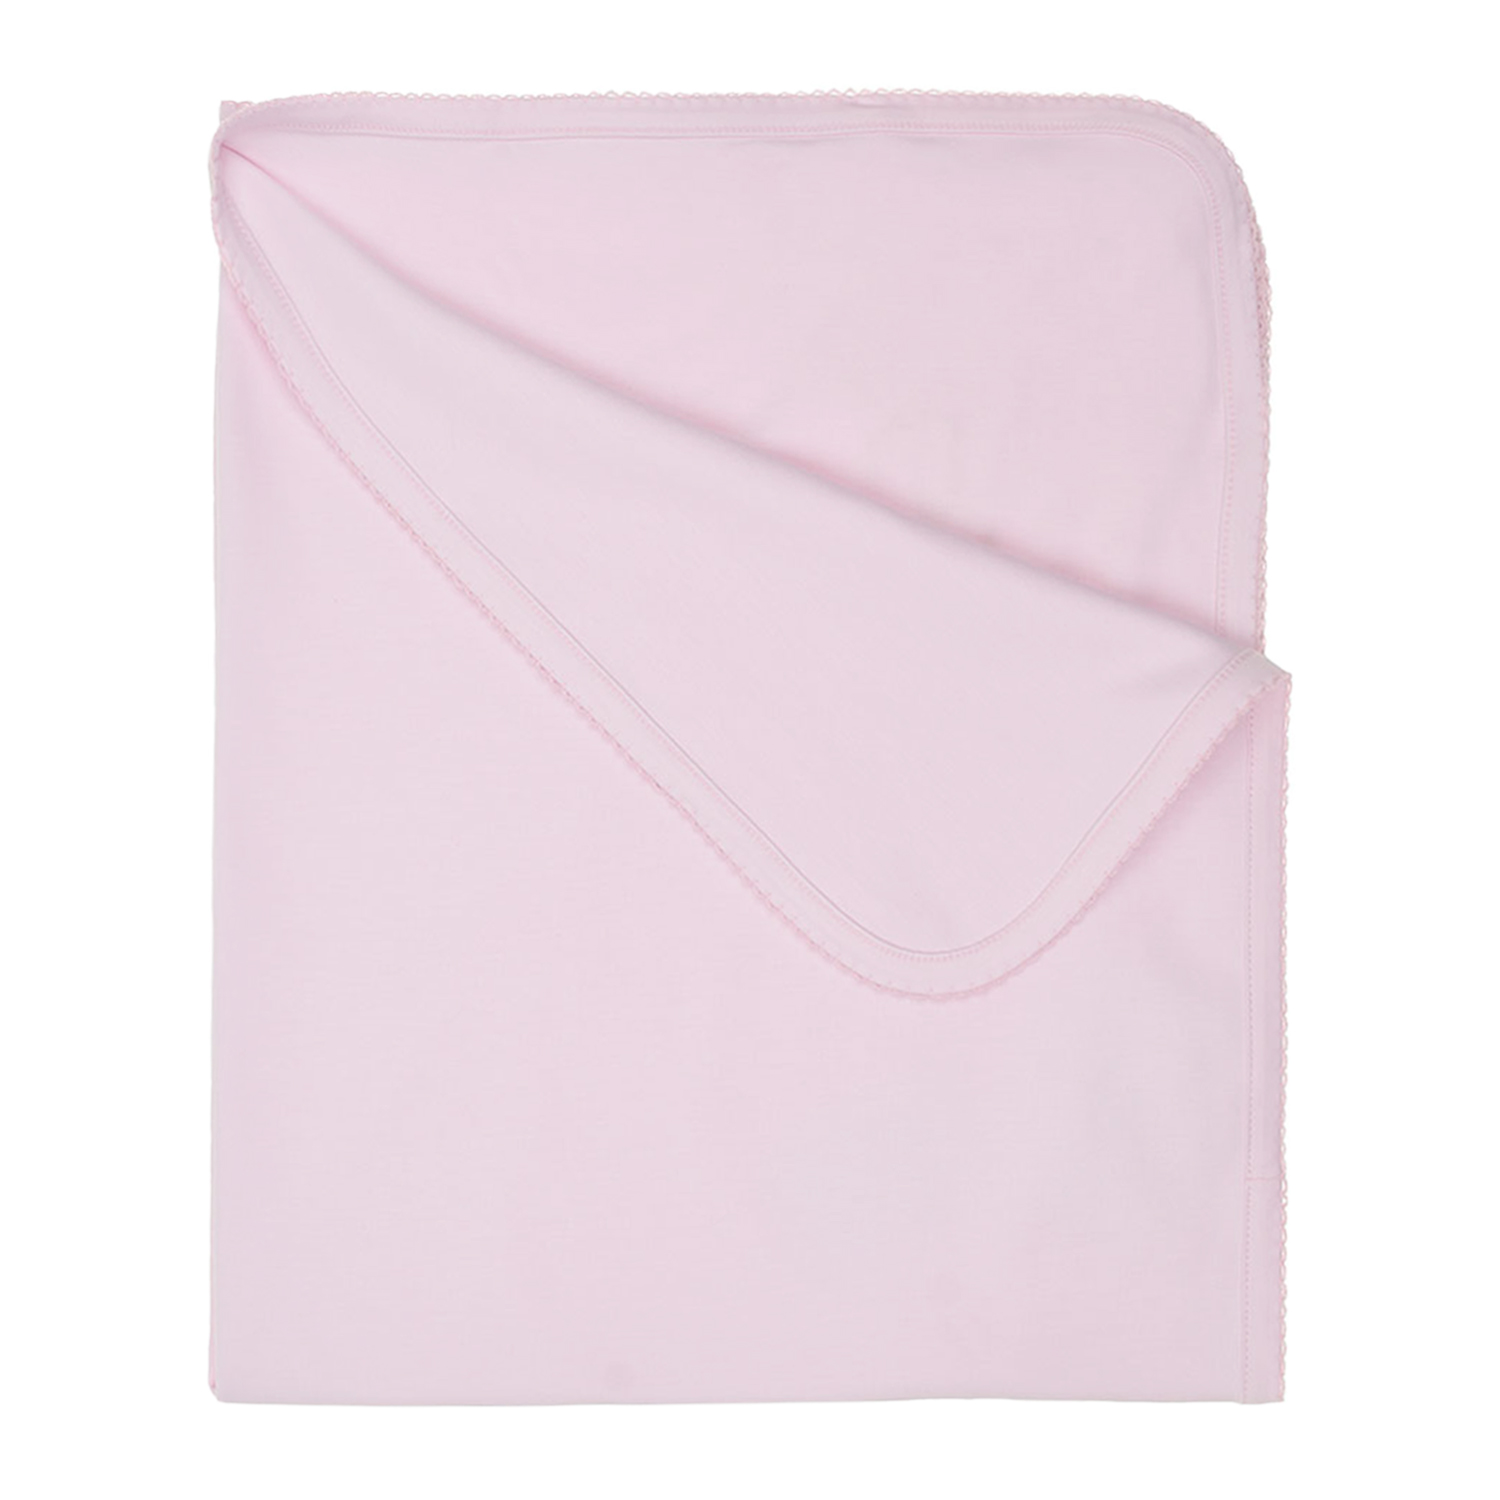 Розовый плед с цветочной вышивкой Kissy Kissy детский, размер unica - фото 2